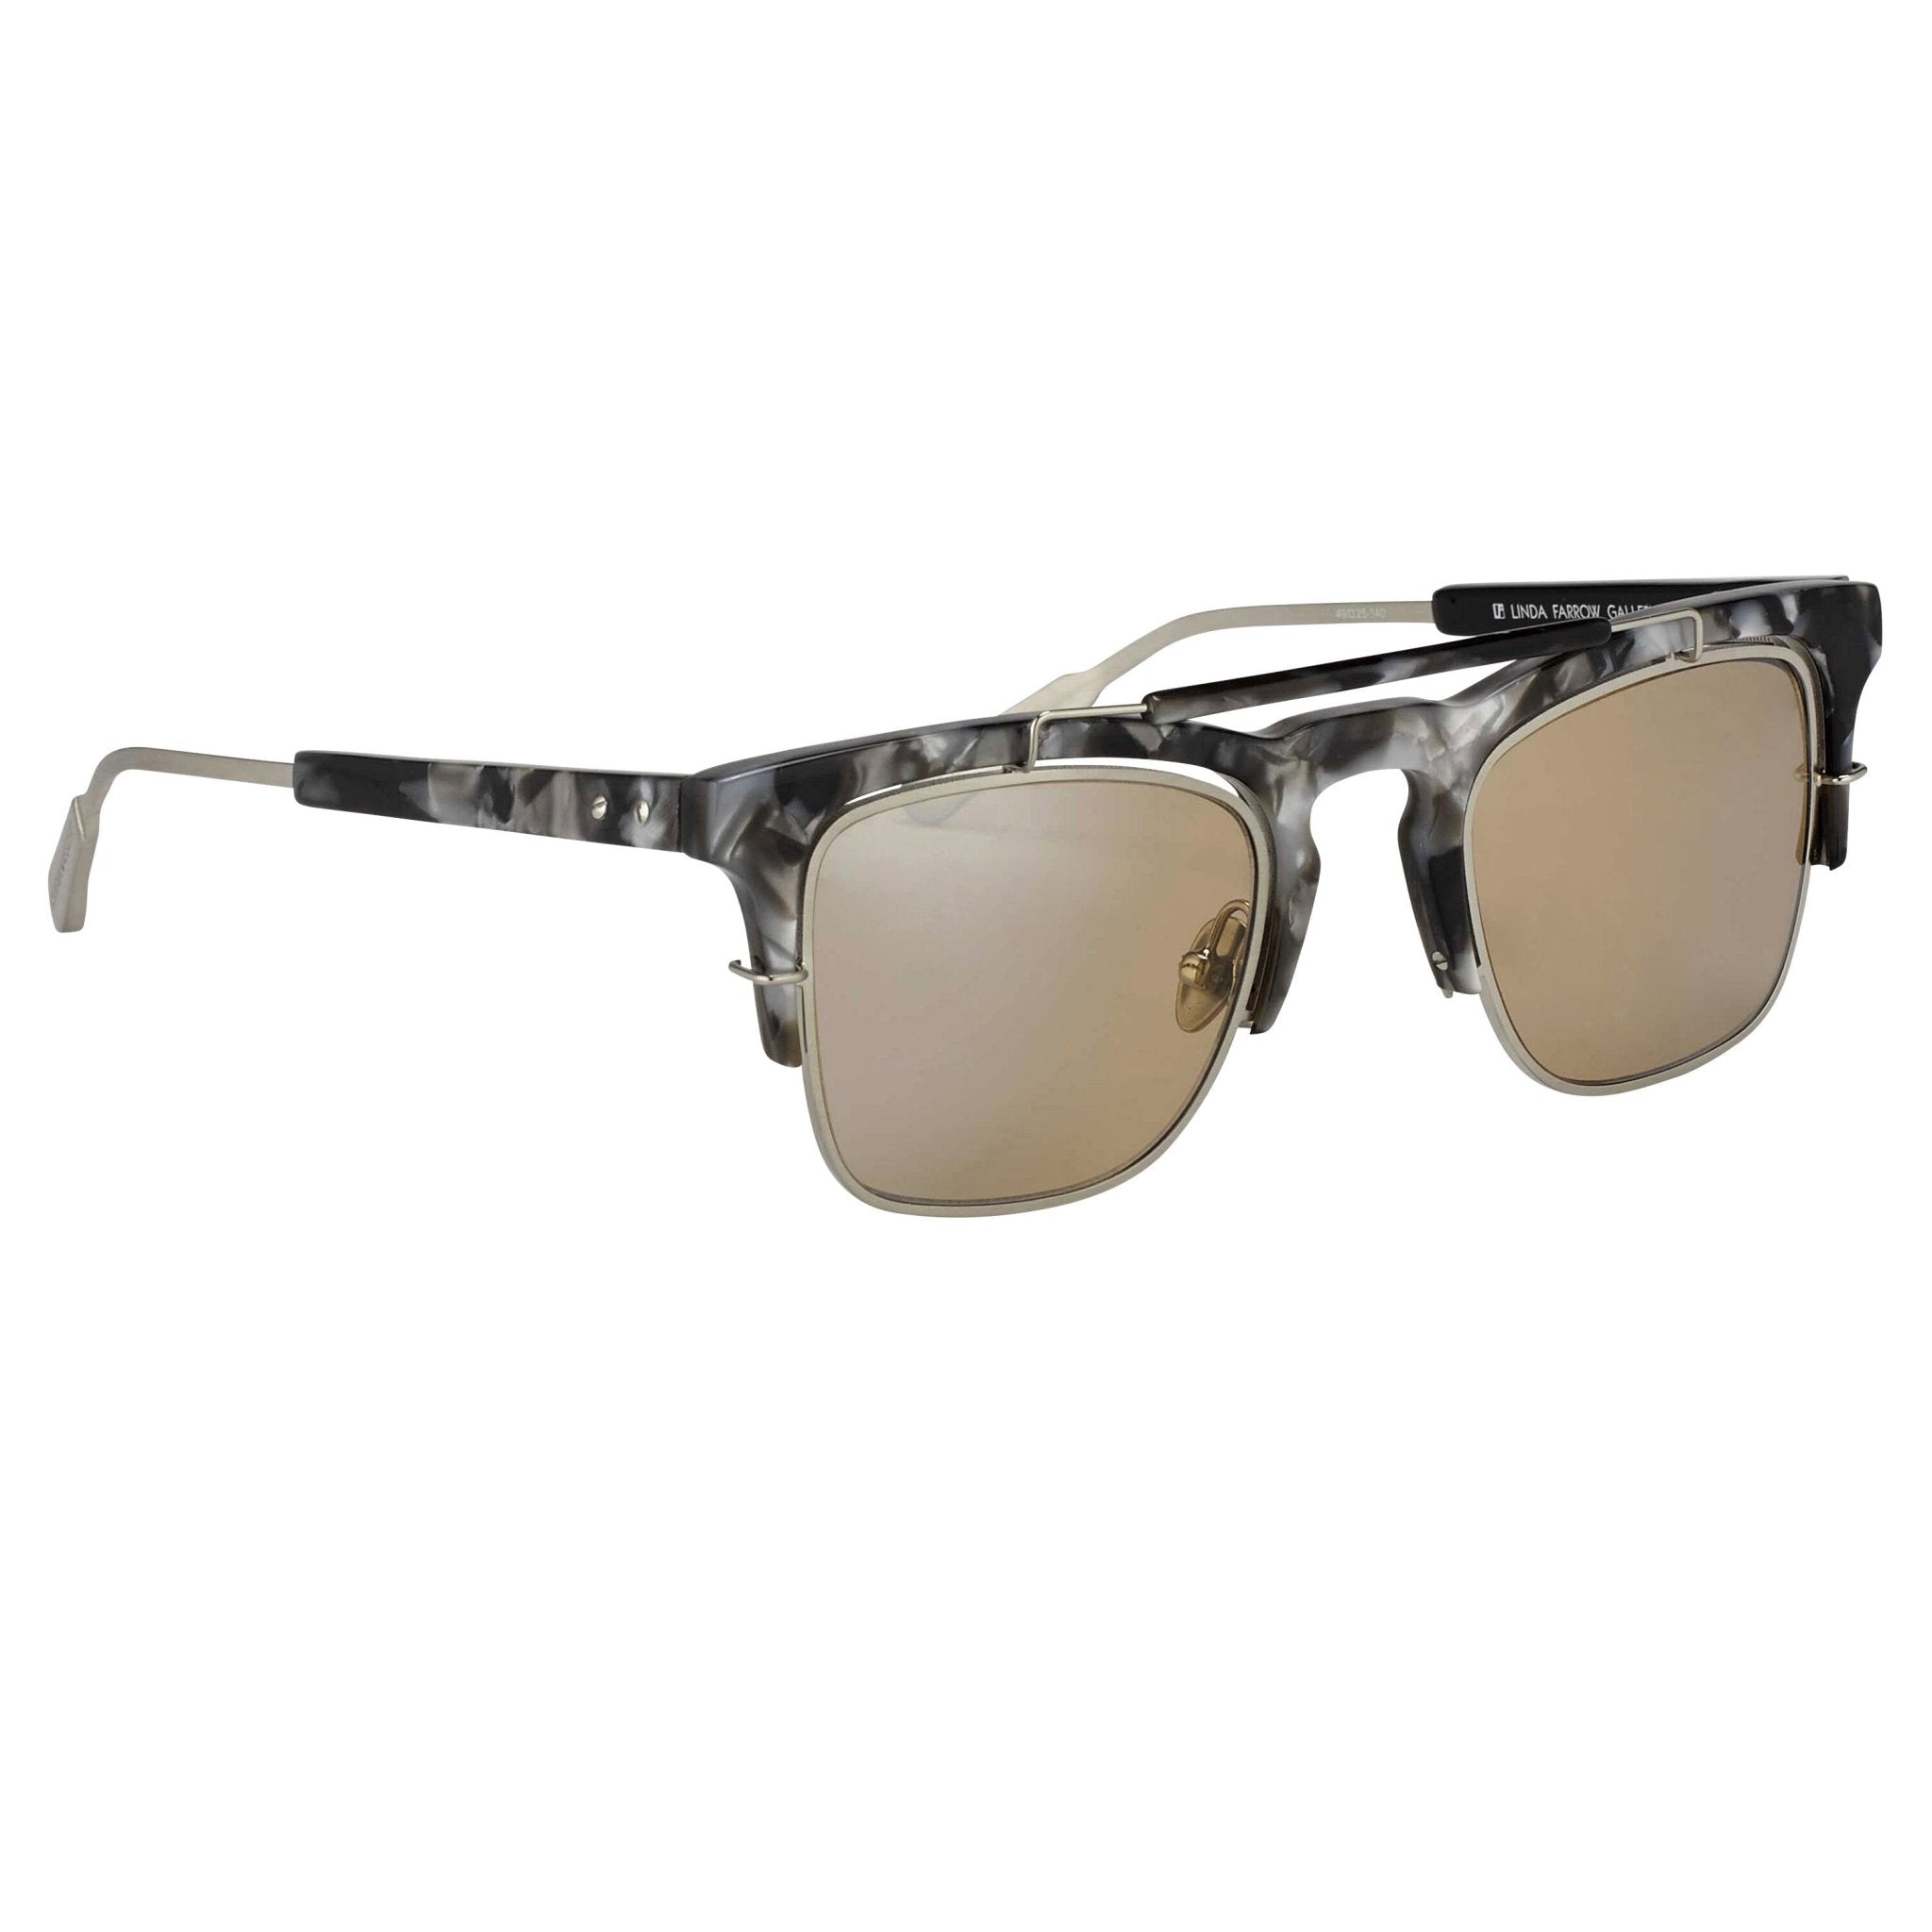 kris van assche sunglasses with d frame black tortoiseshell silver and orange mirror lenses category 3 kva66c5sun 813080